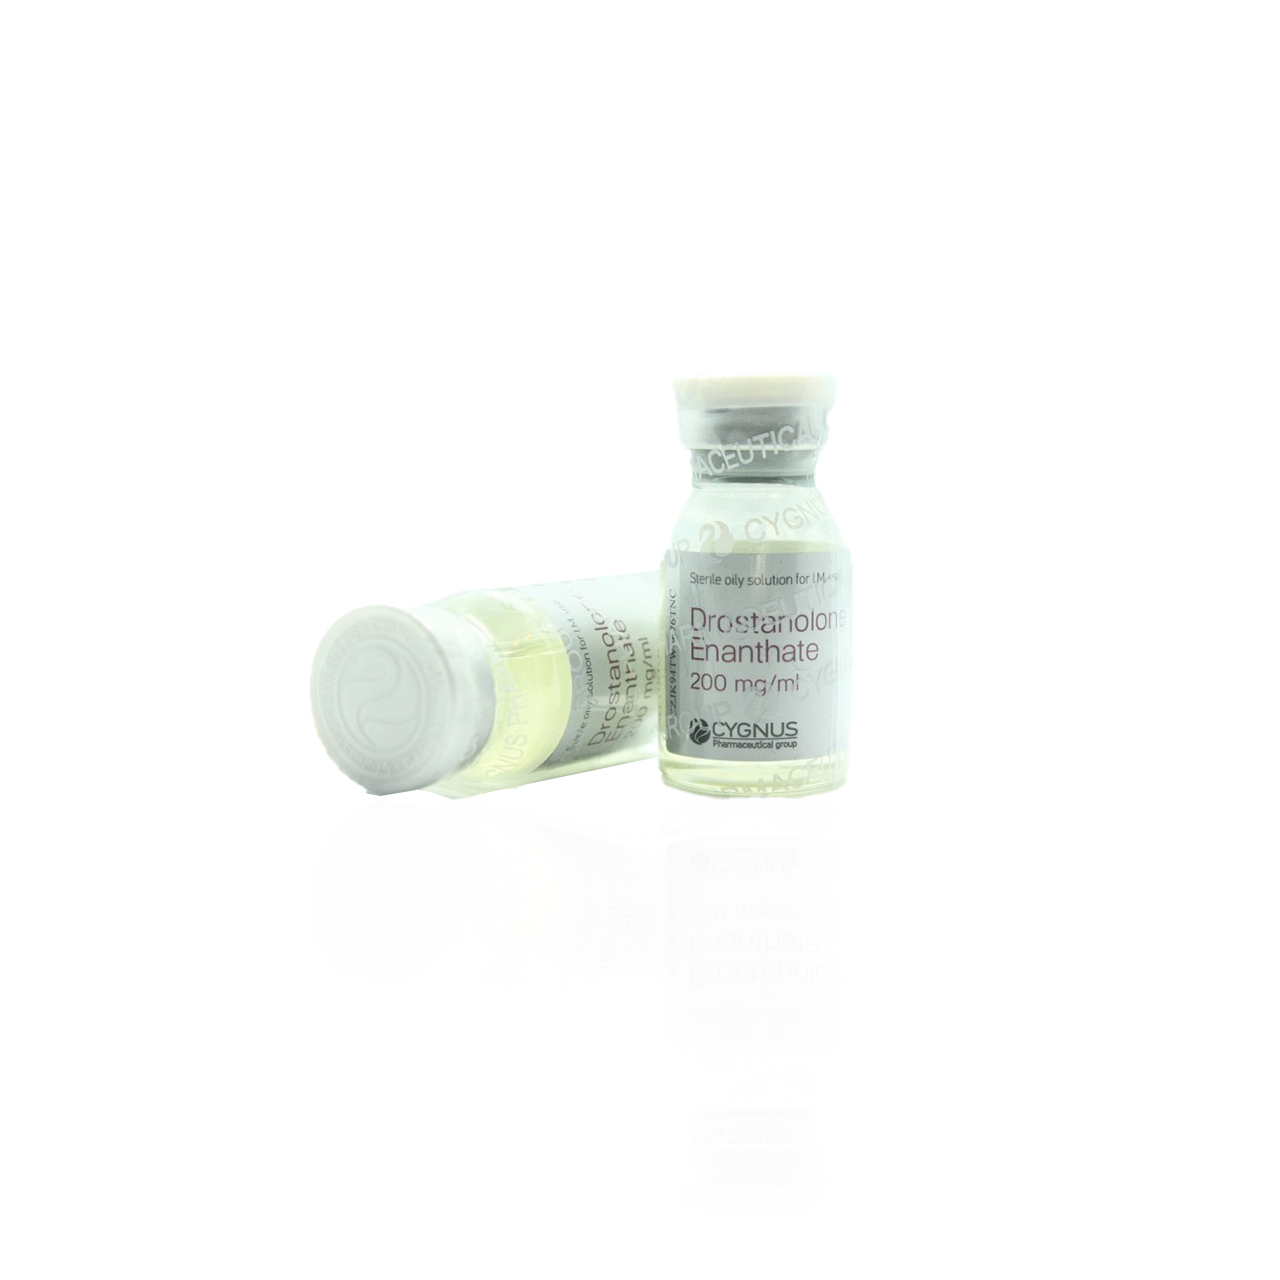 Drostanolone Enanthate 200 mg Cygnus Drostanolone